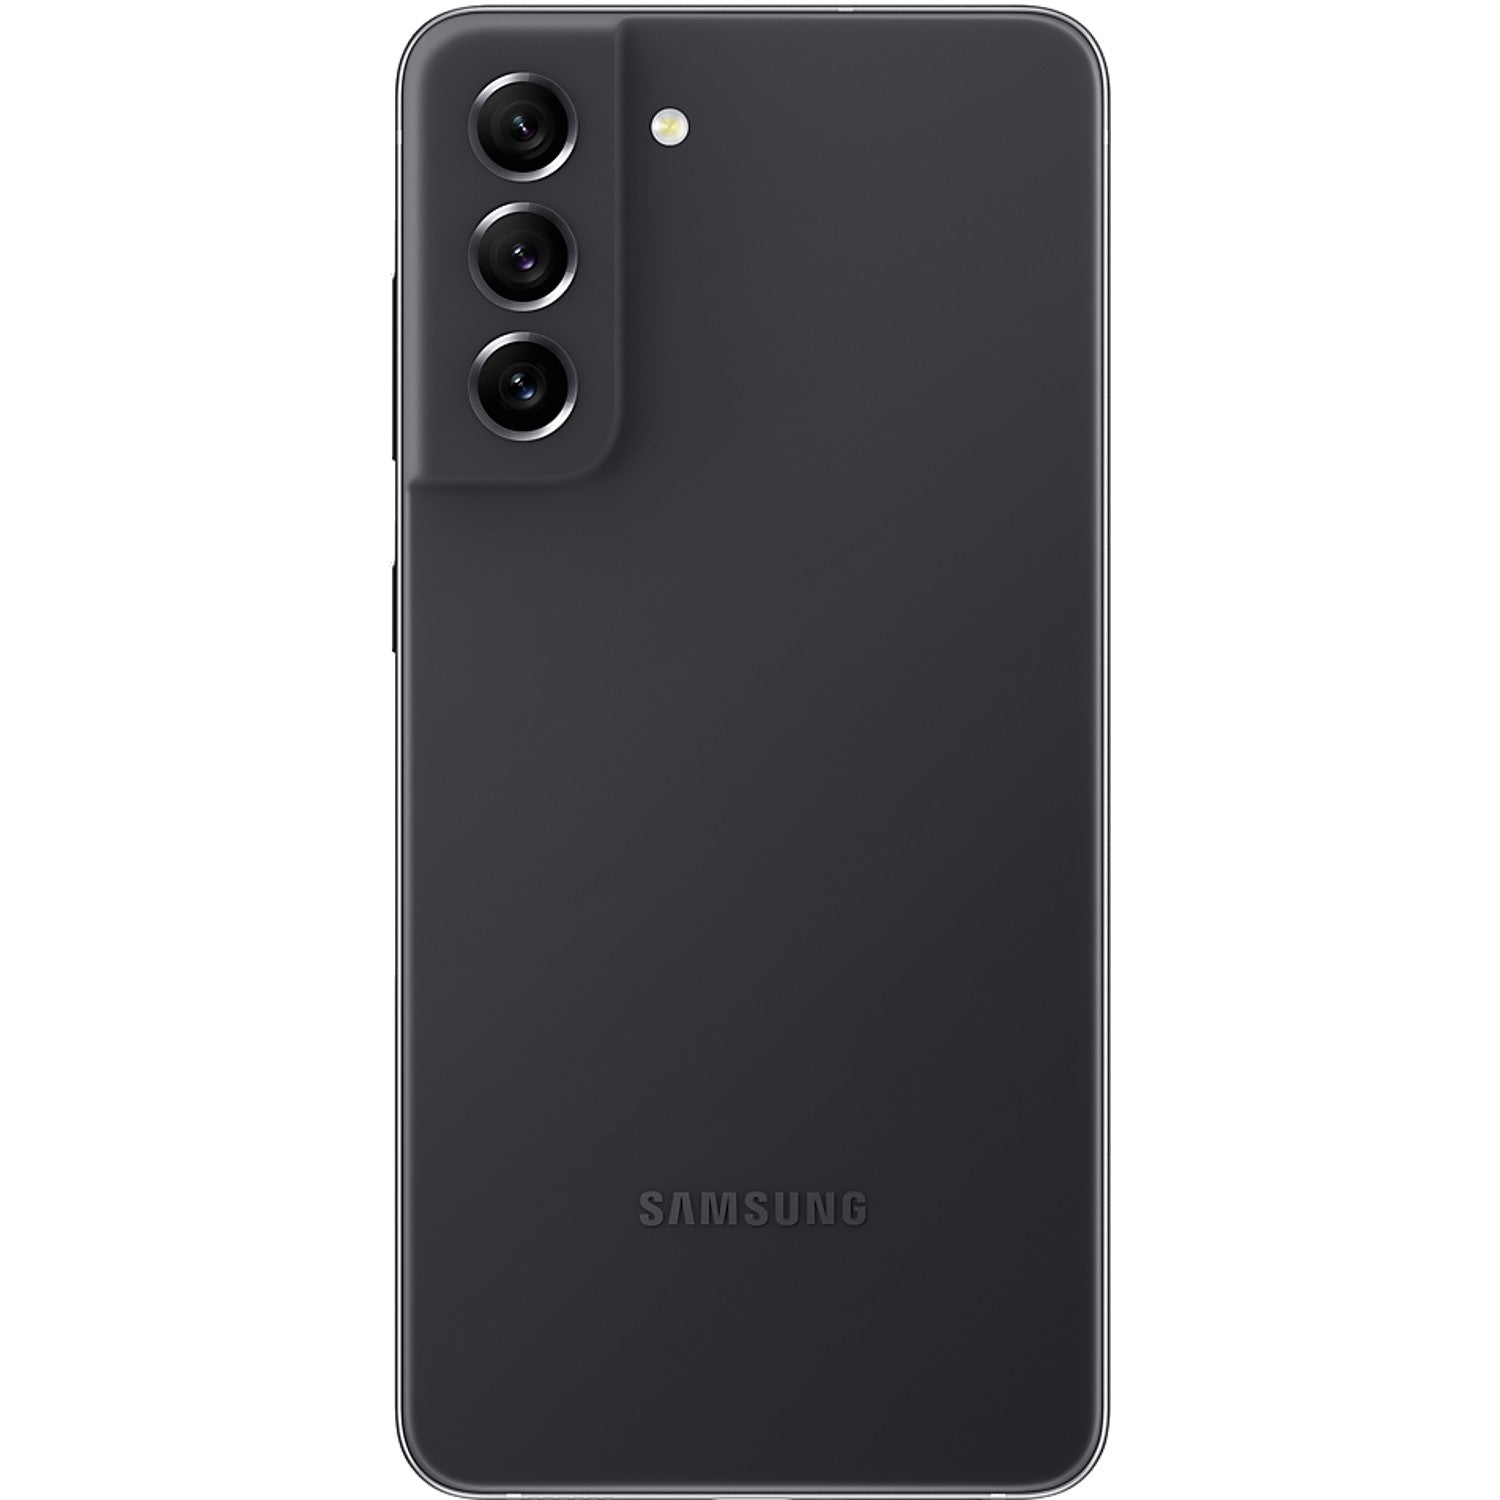 Samsung Galaxy S21 FE 5G - New fonezworldarklow